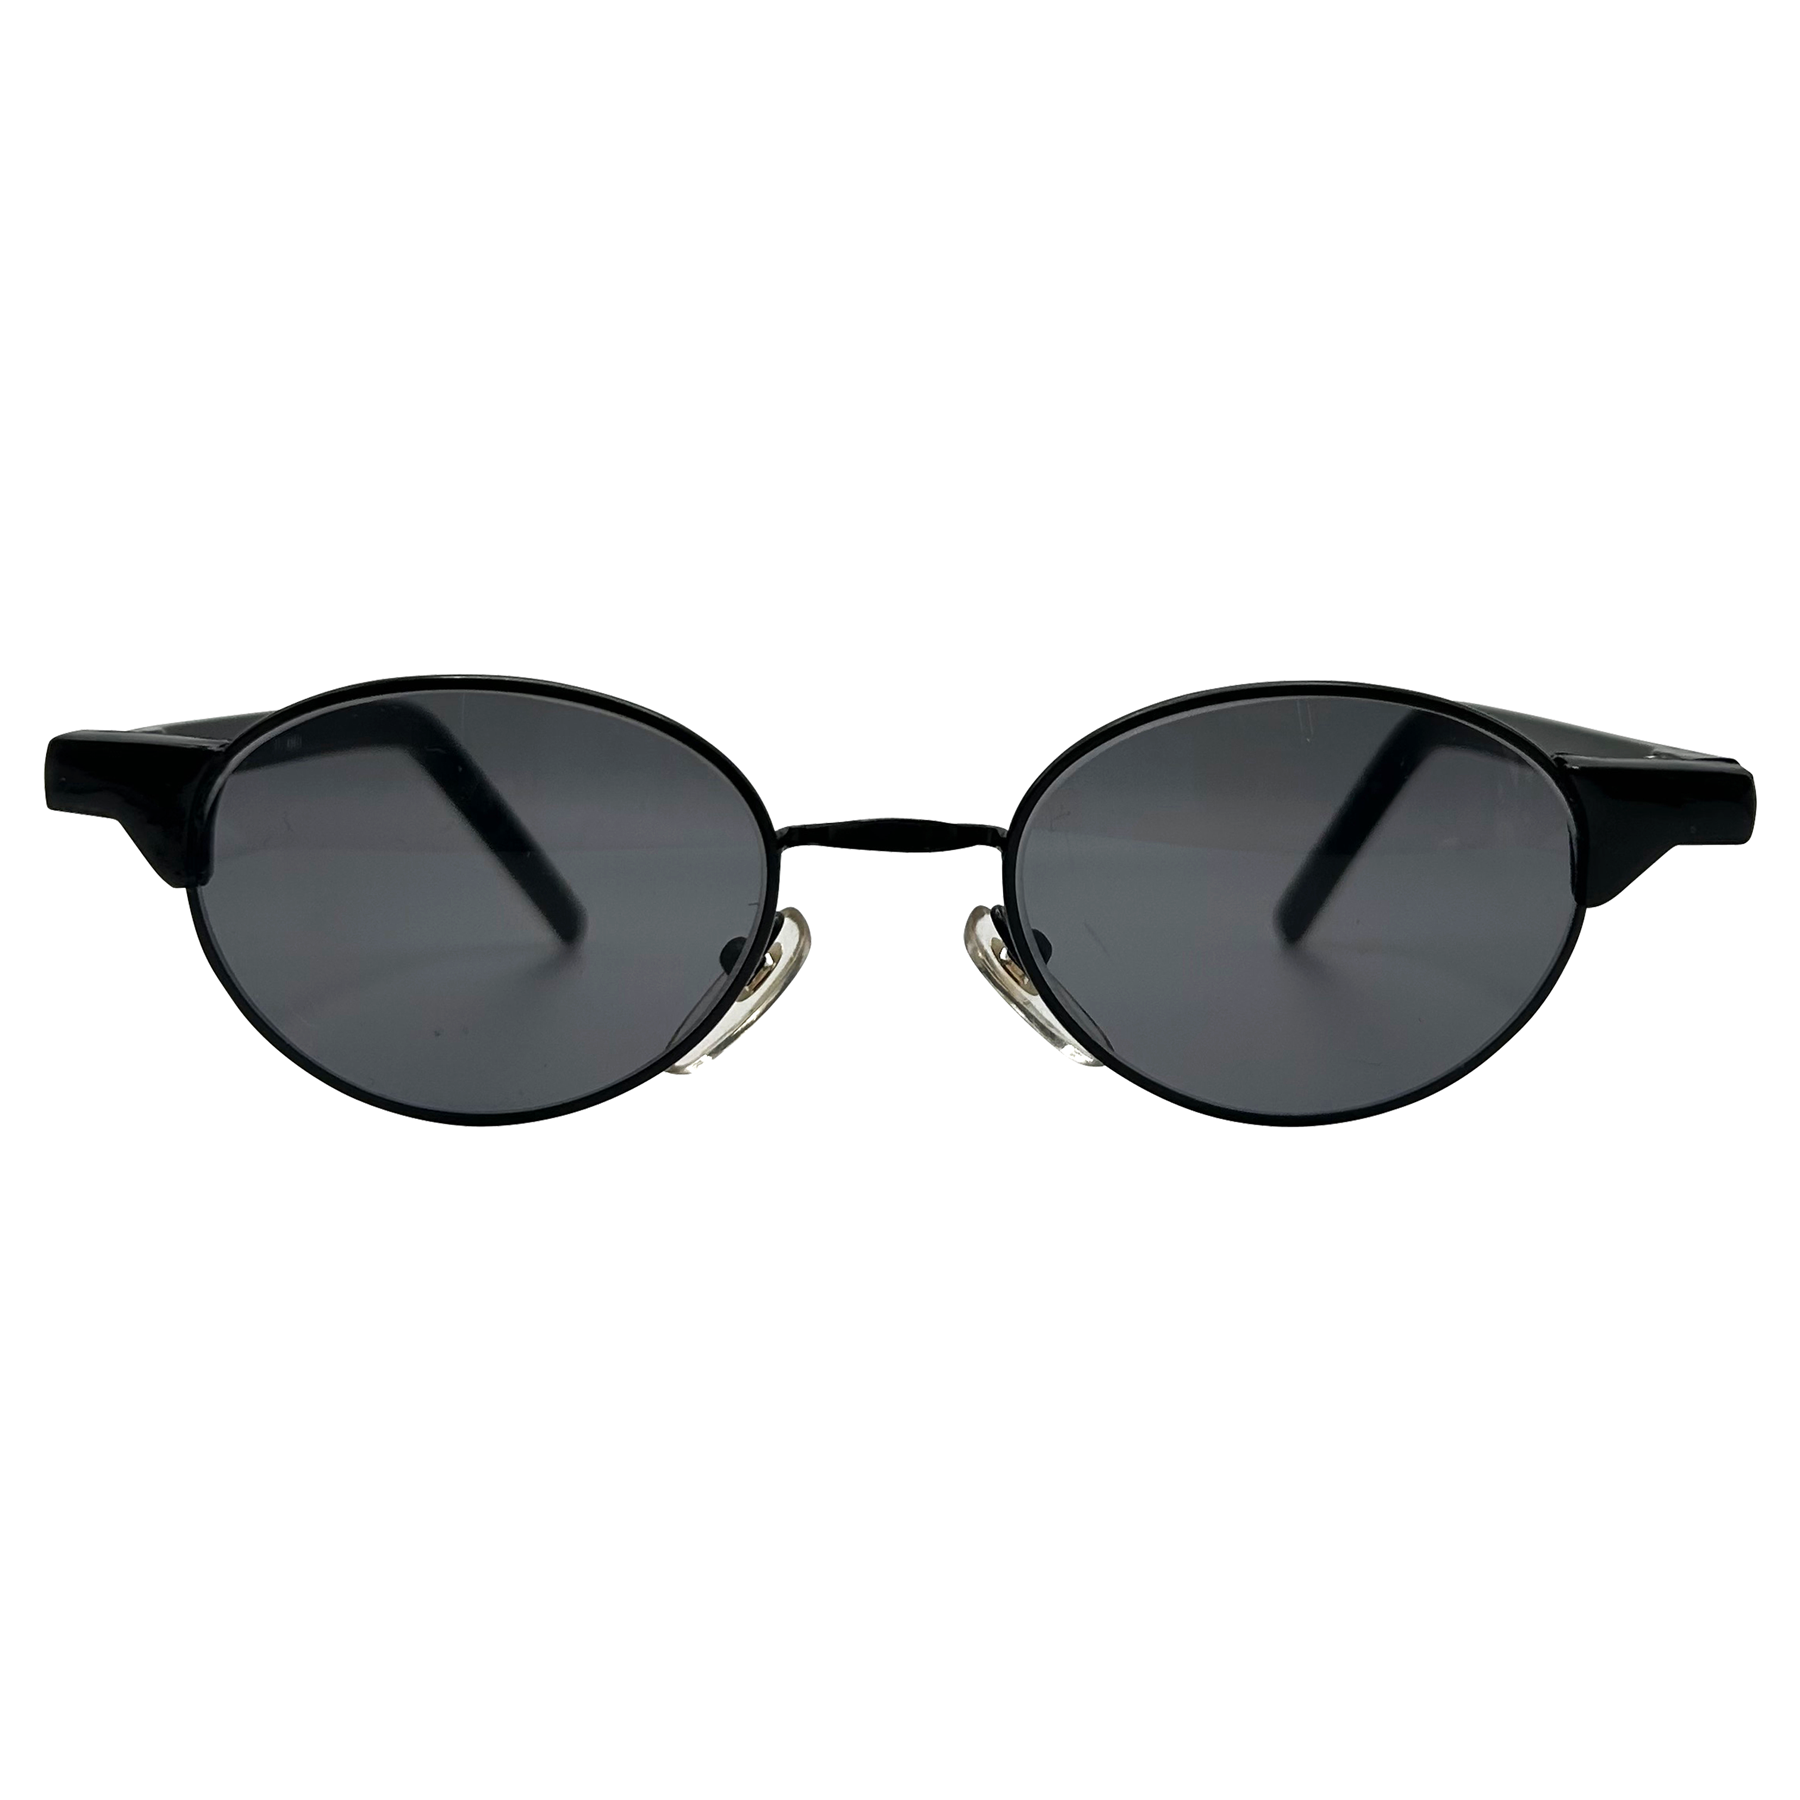 CESSNA Black/Super Dark Oval Sunglasses